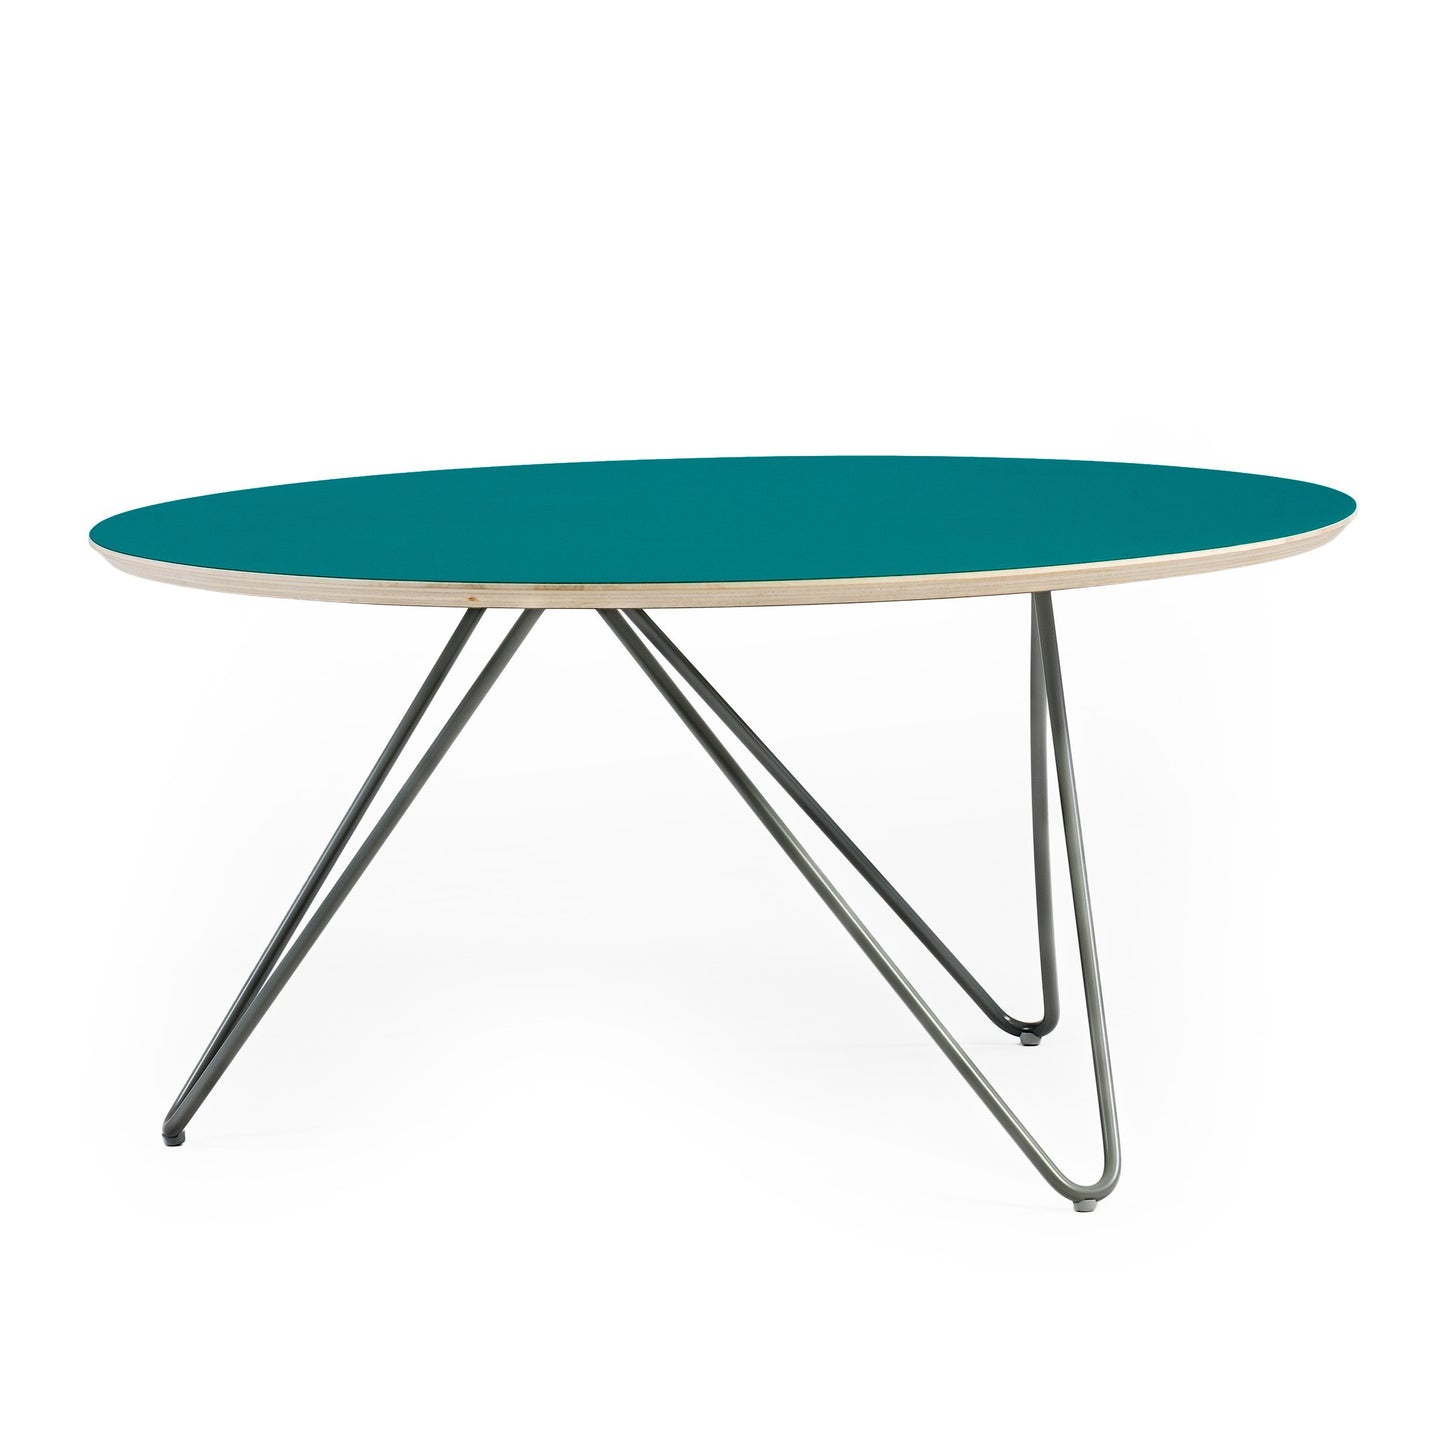 Coffee Table Zig-Zag R75 - Turquoise